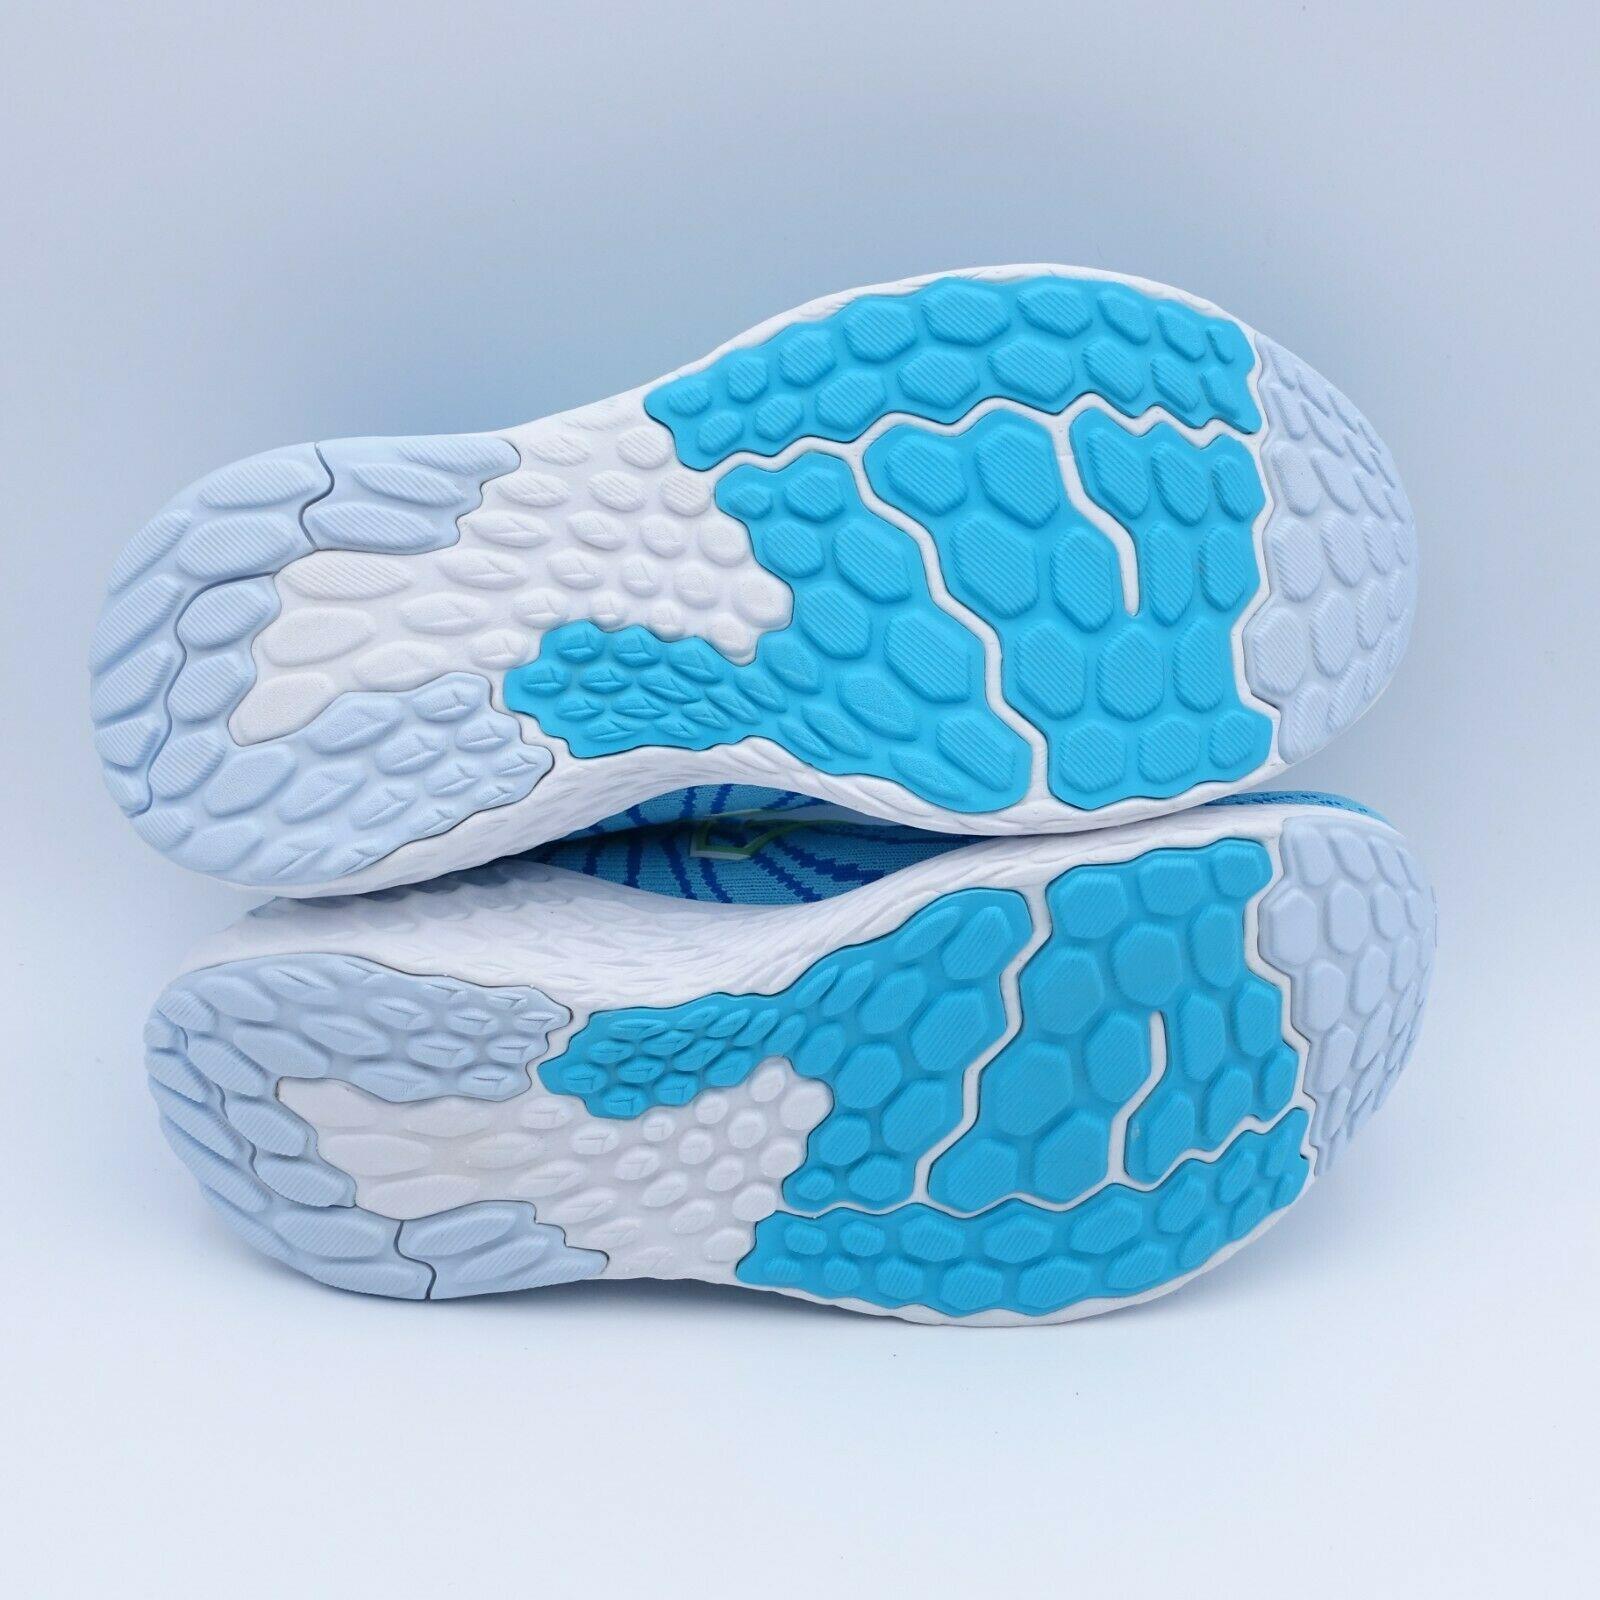 New Balance shoes Fresh Foam - Blue 4